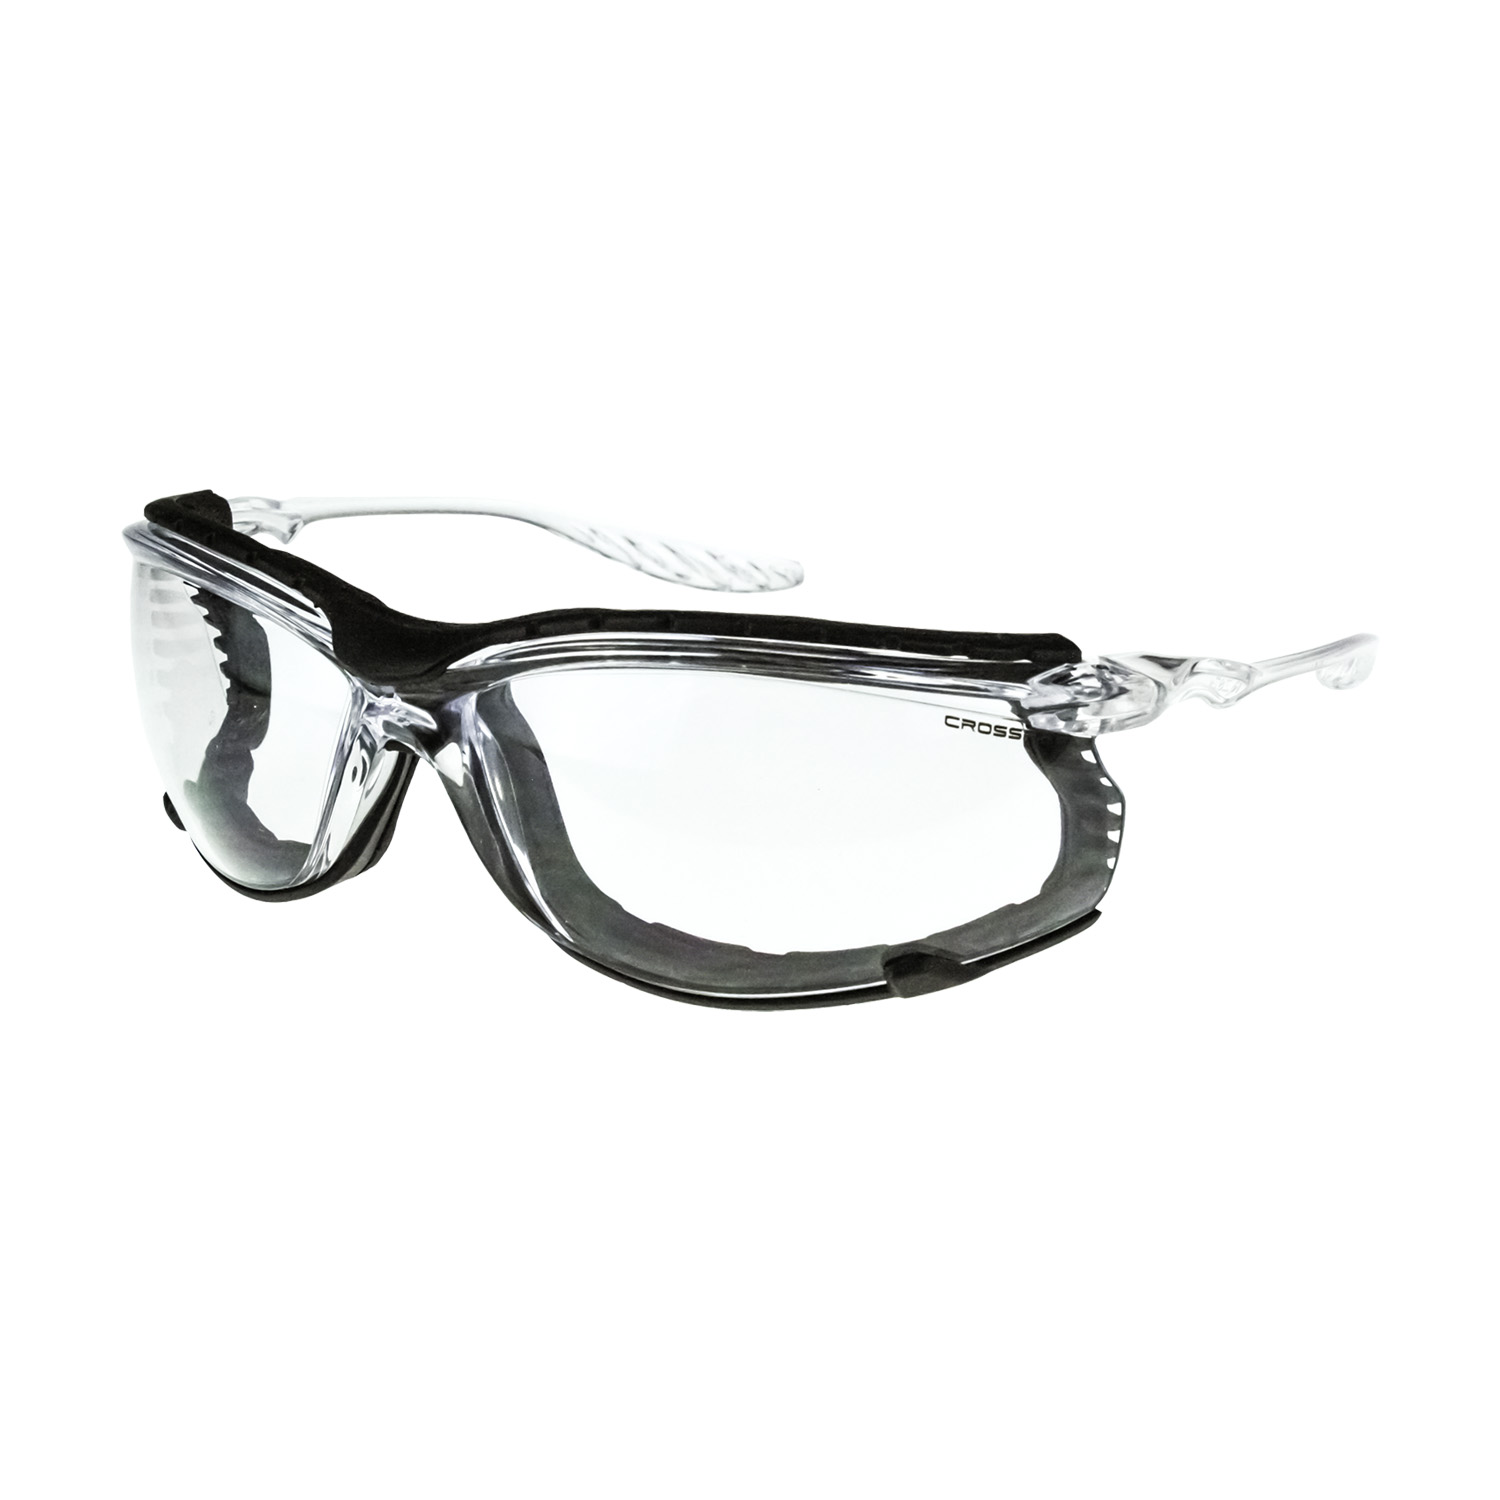 Crossfire Eyewear 24seven Safety Glasses 